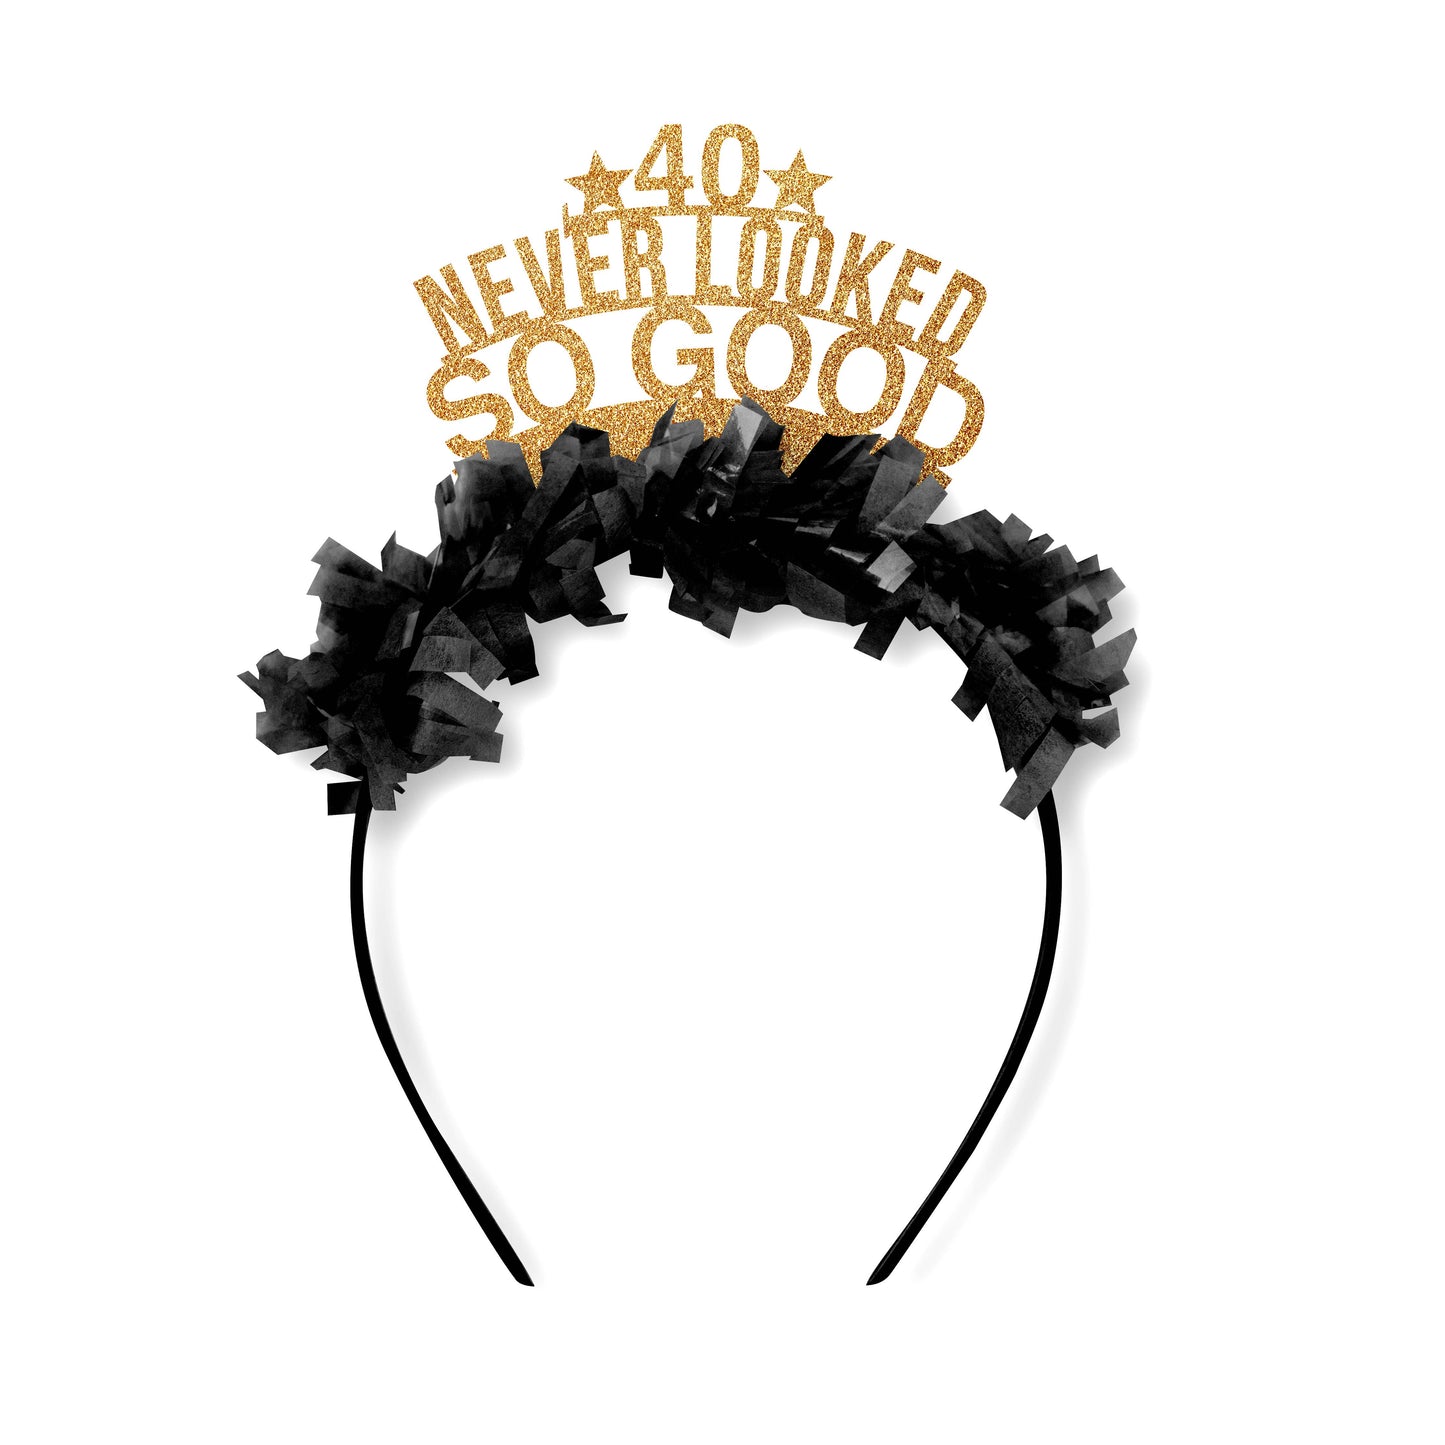 Festive Gal Party Headband: 40 Never Looked So Good